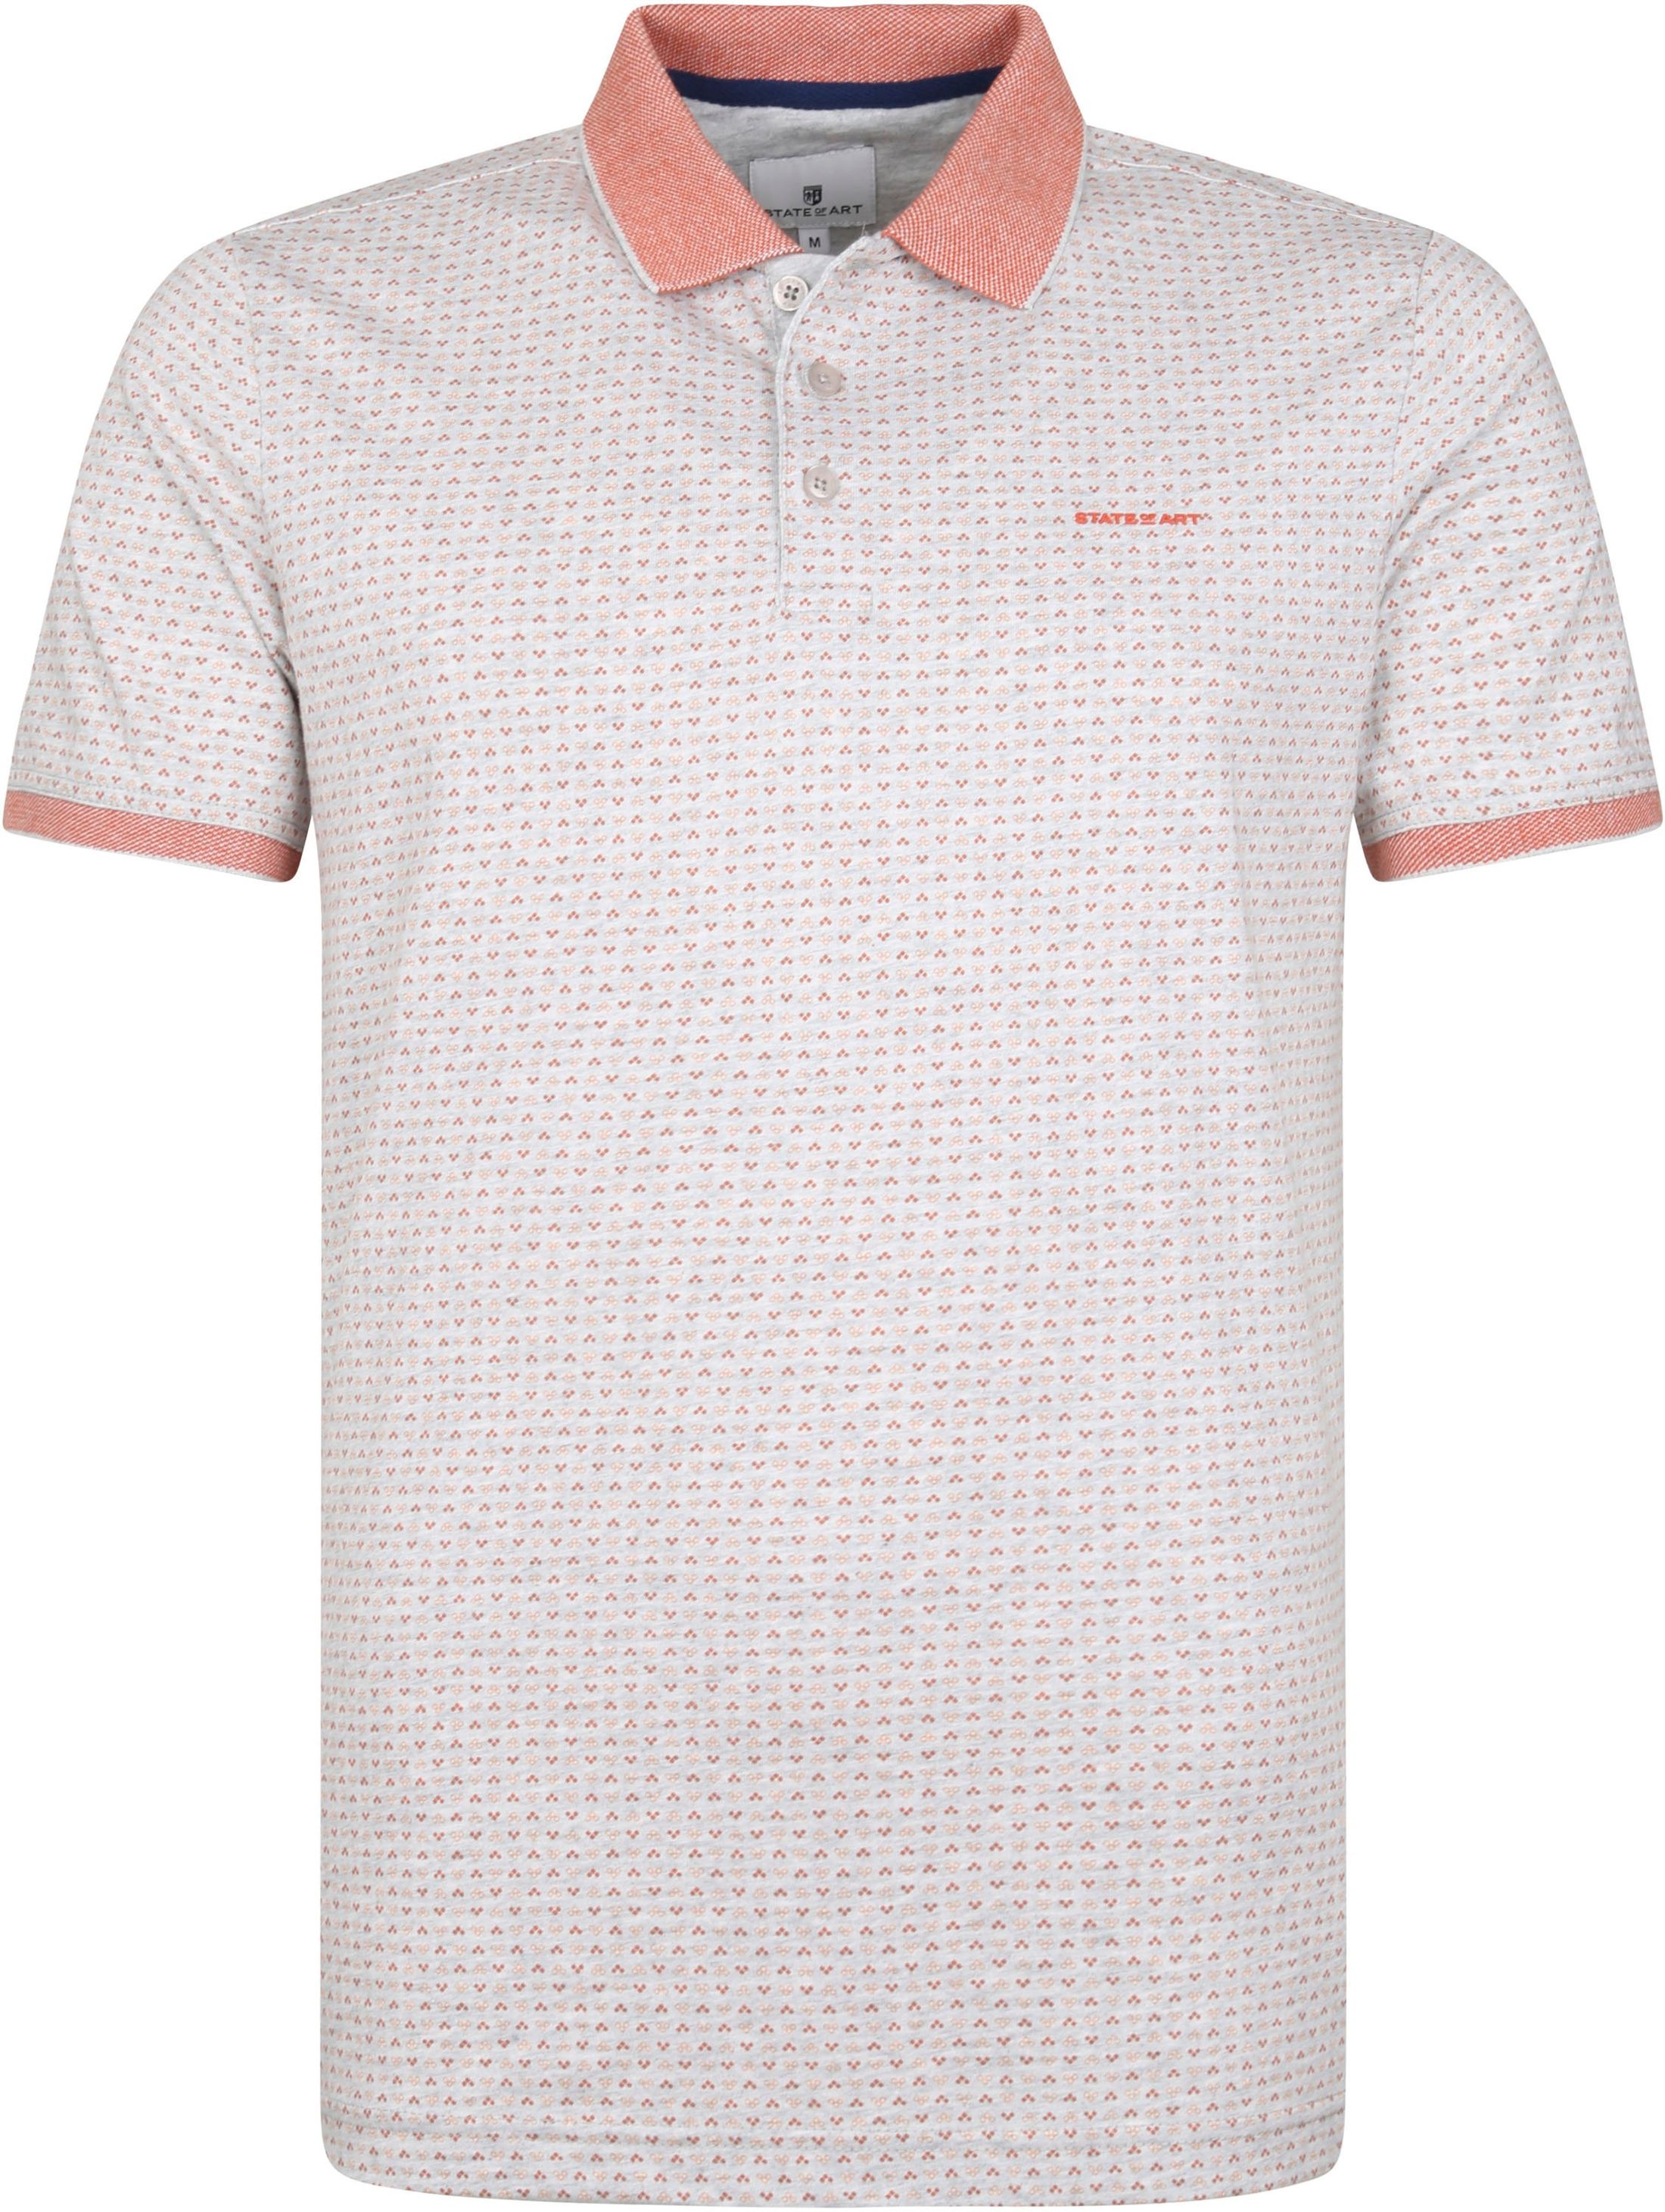 State Of Art Polo Shirt Print Grey Red Orange size L